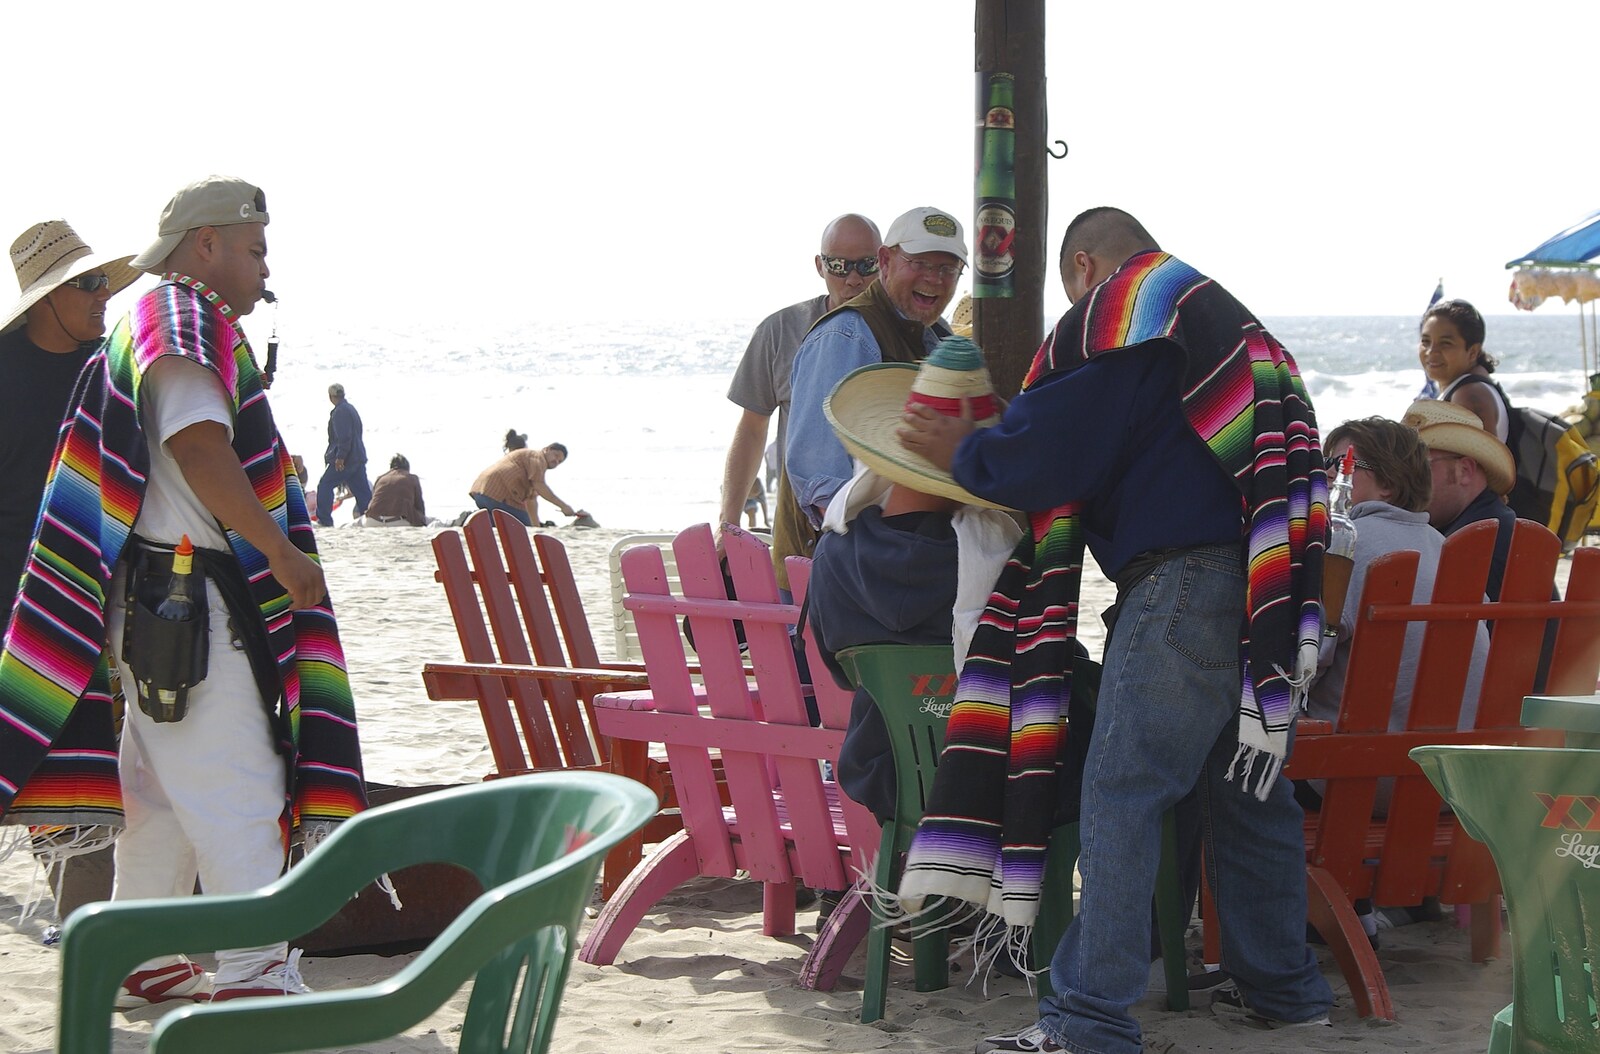 Random blanket sellers from Rosarito and Tijuana, Baja California, Mexico - 2nd March 2008